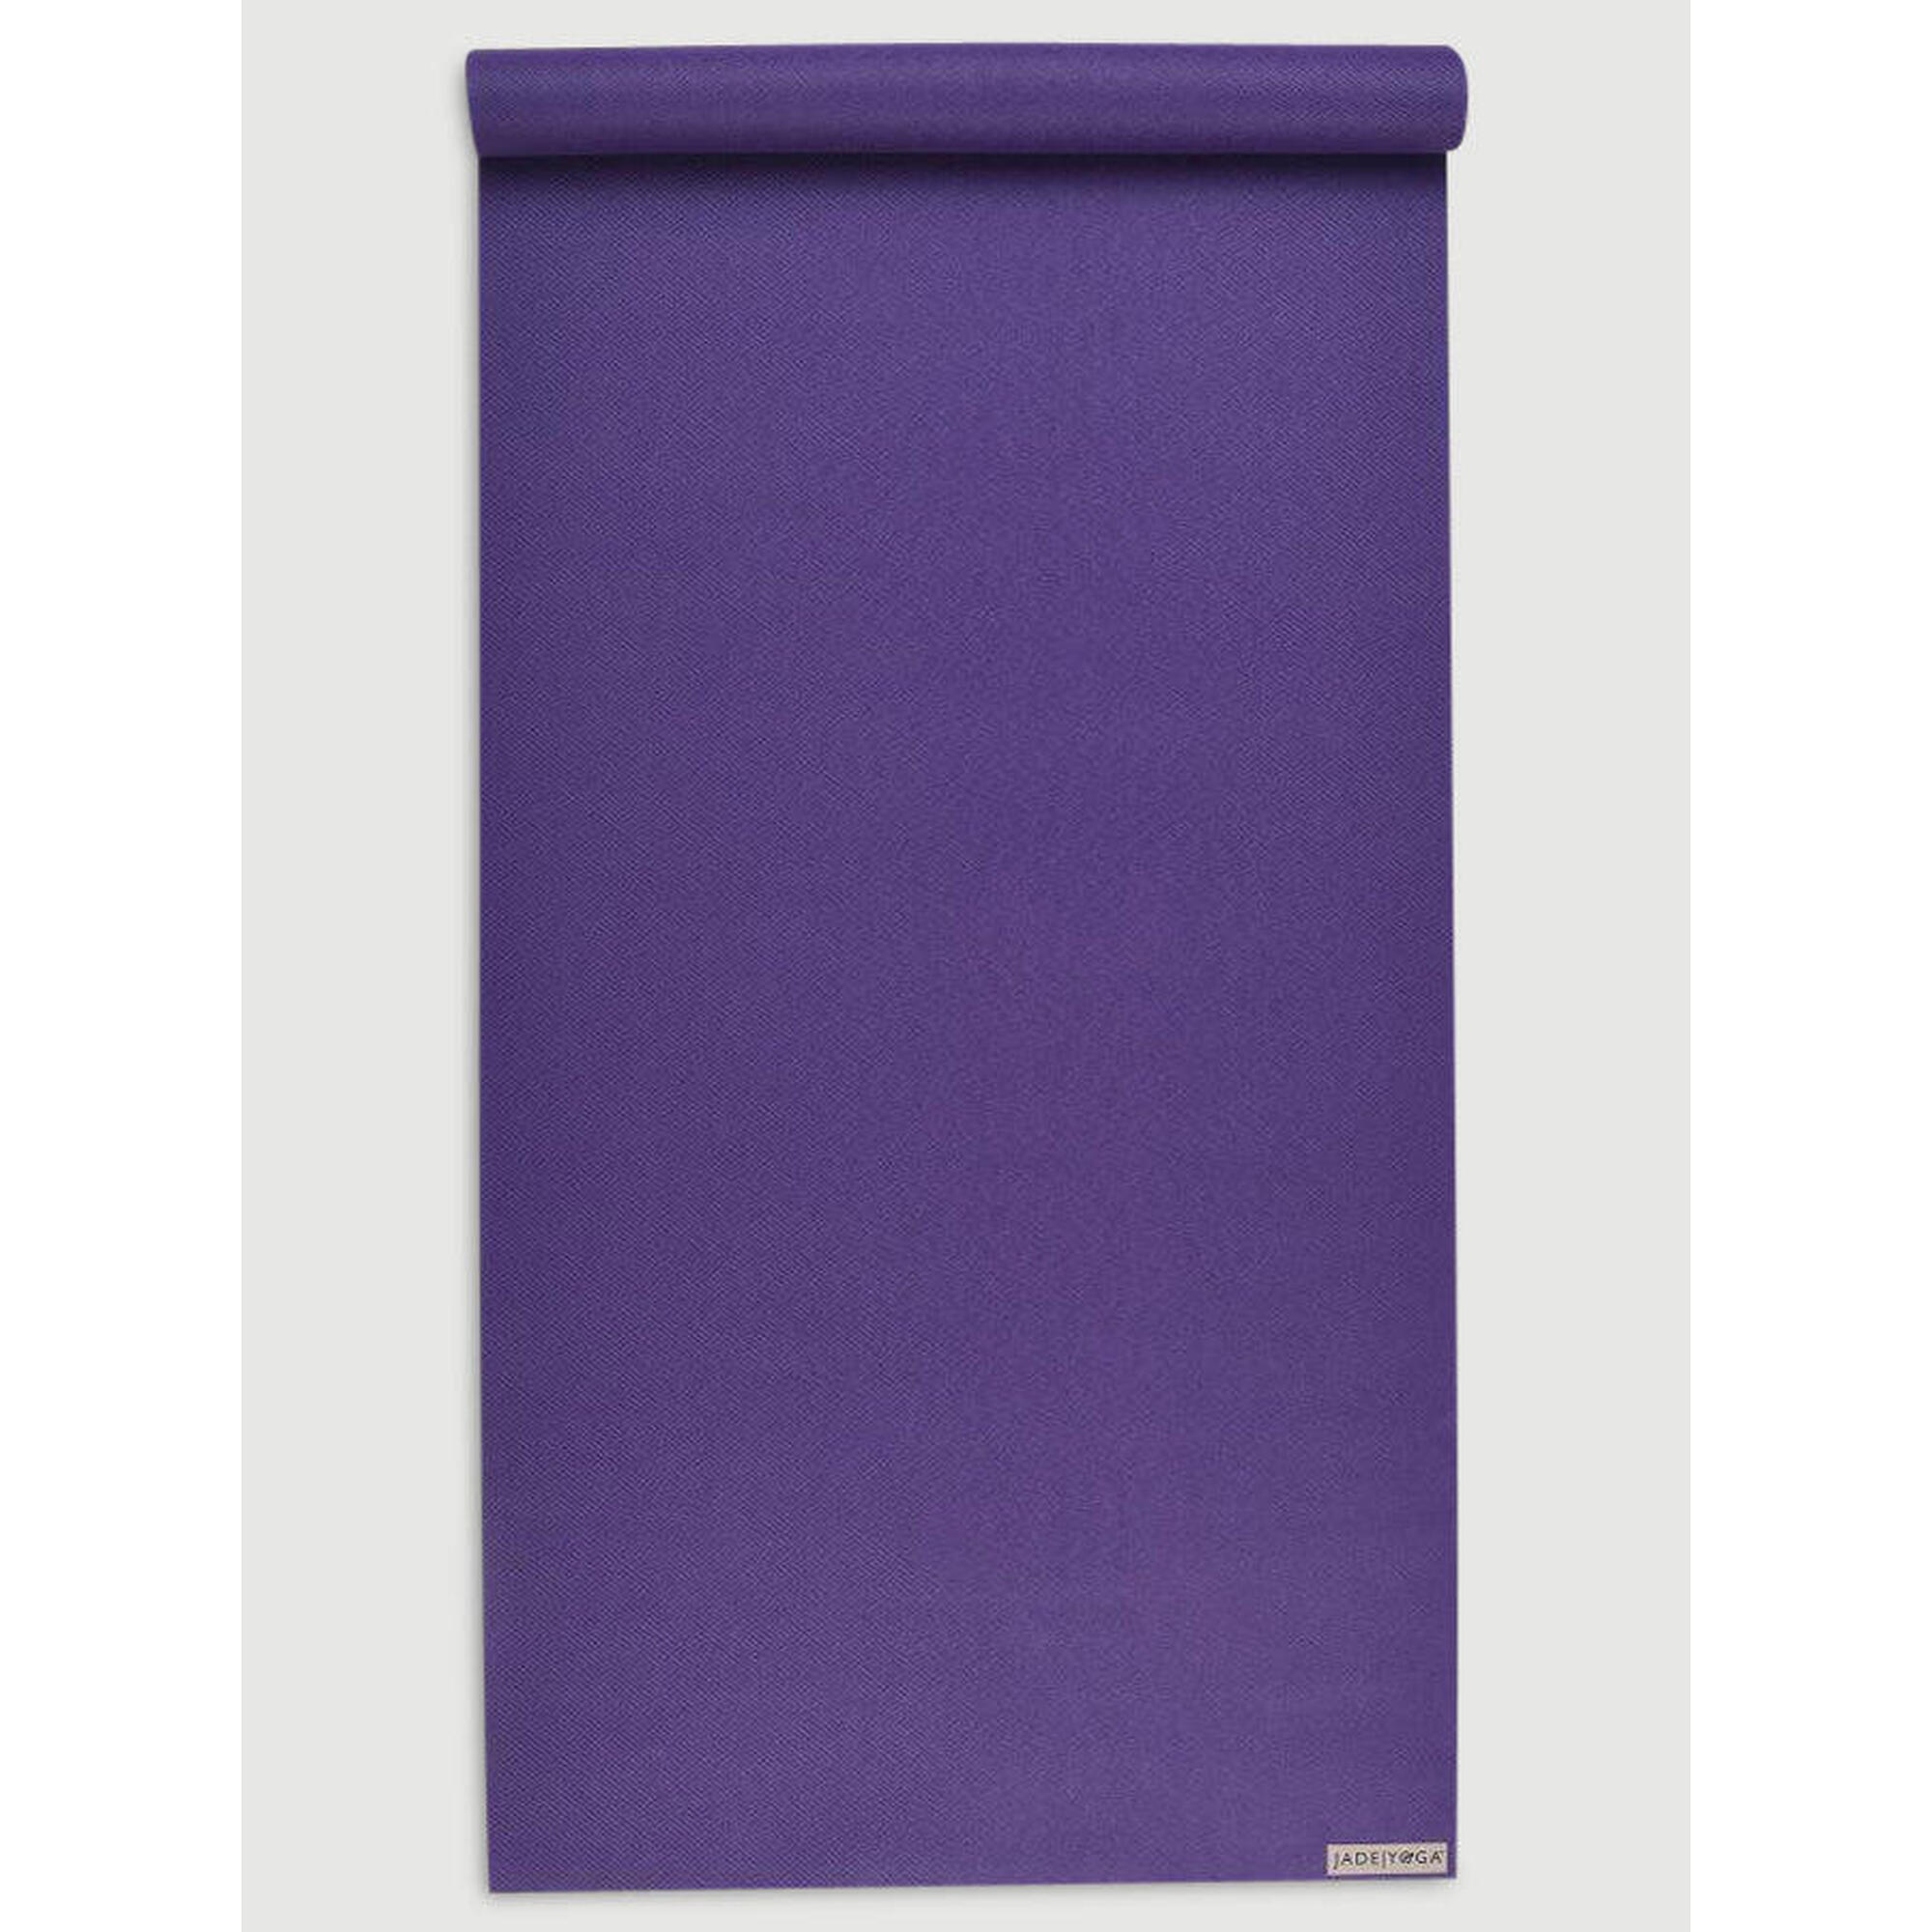 JADE YOGA Jade Yoga 68 Inch Travel Yoga Mat 3mm - Purple